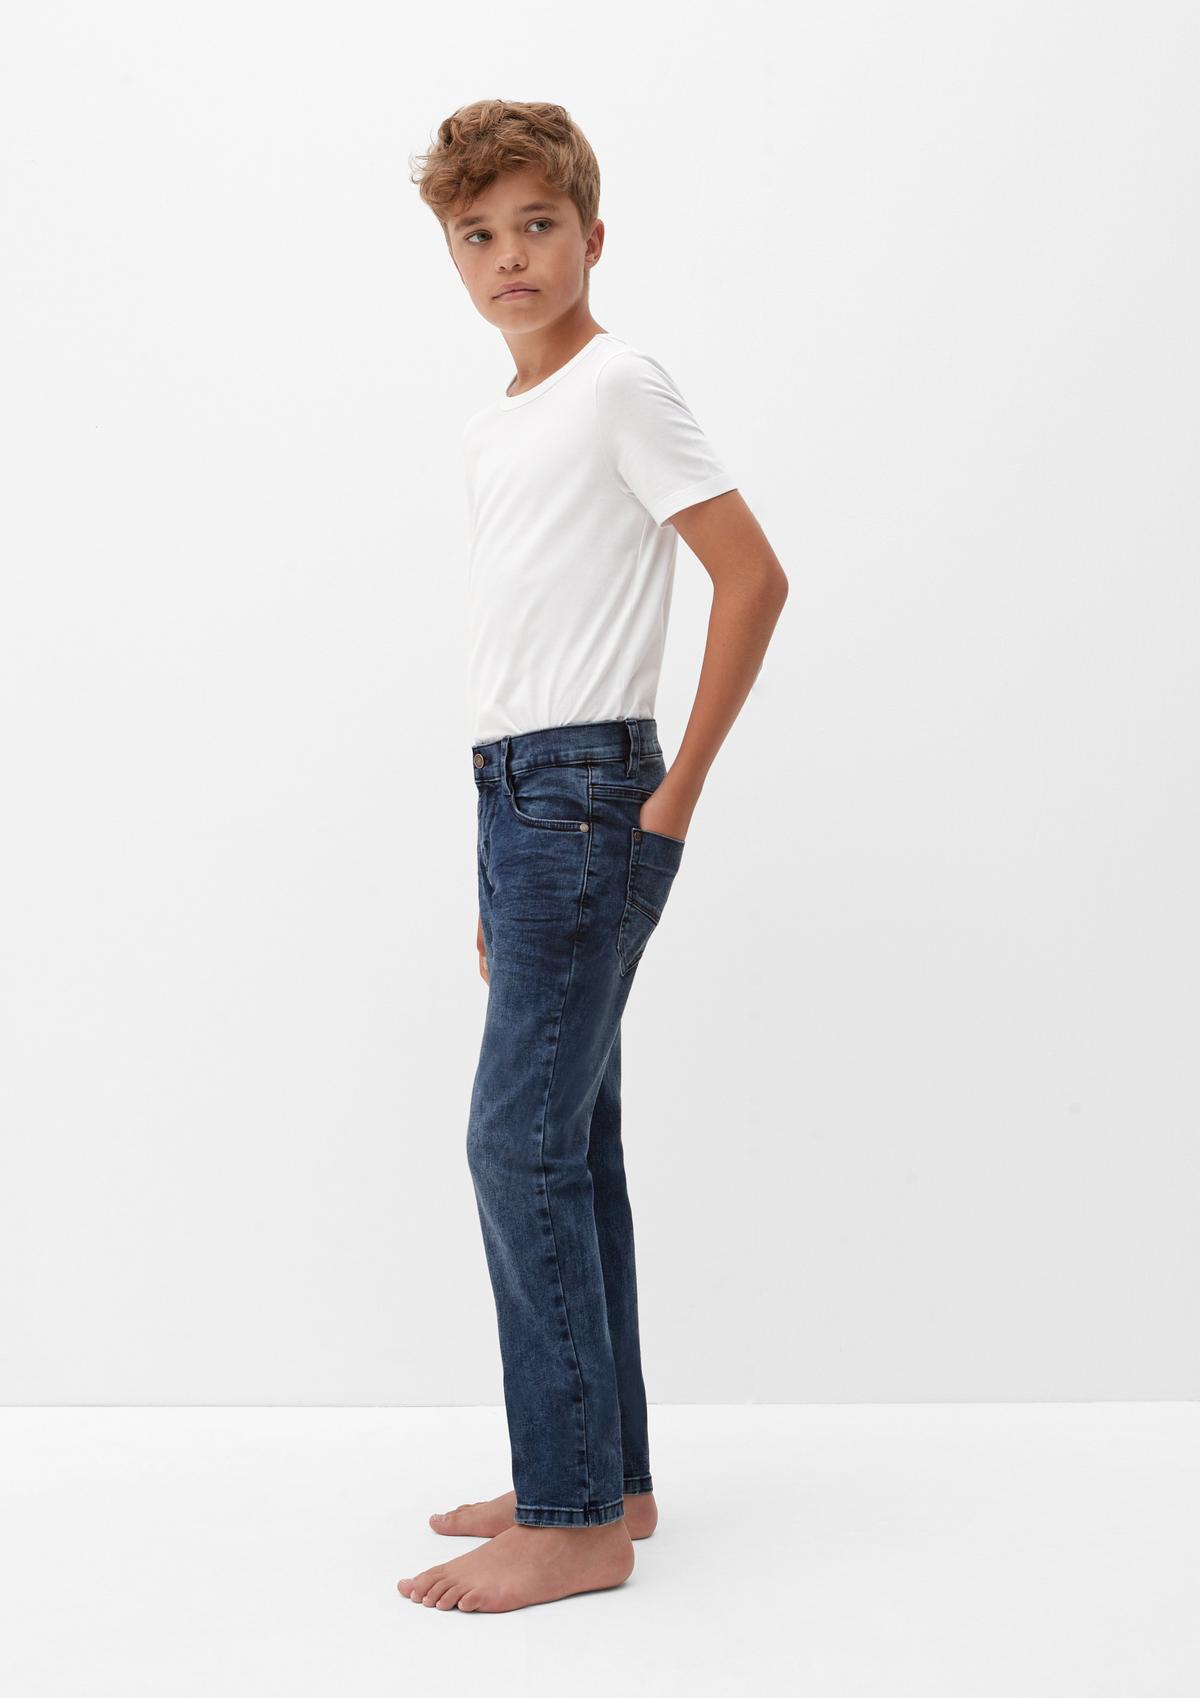 s.Oliver Regular fit: garment wash jeans with a slim leg